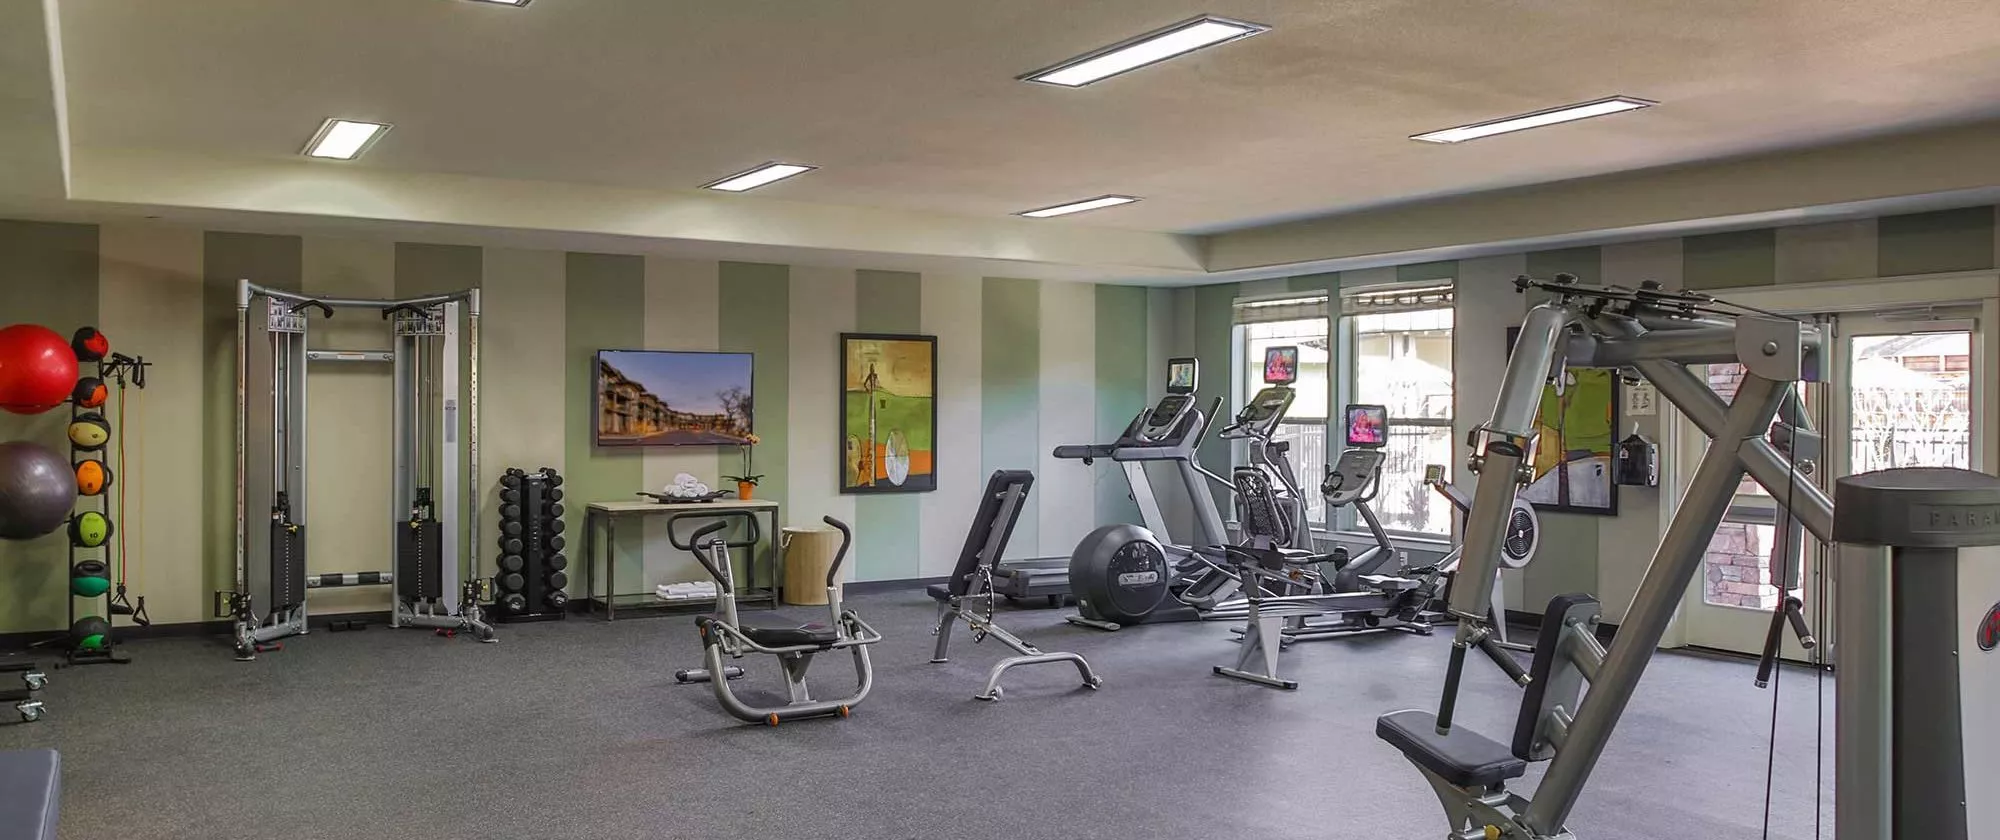 Fountaingrove Lodge fitness room exercise equipment